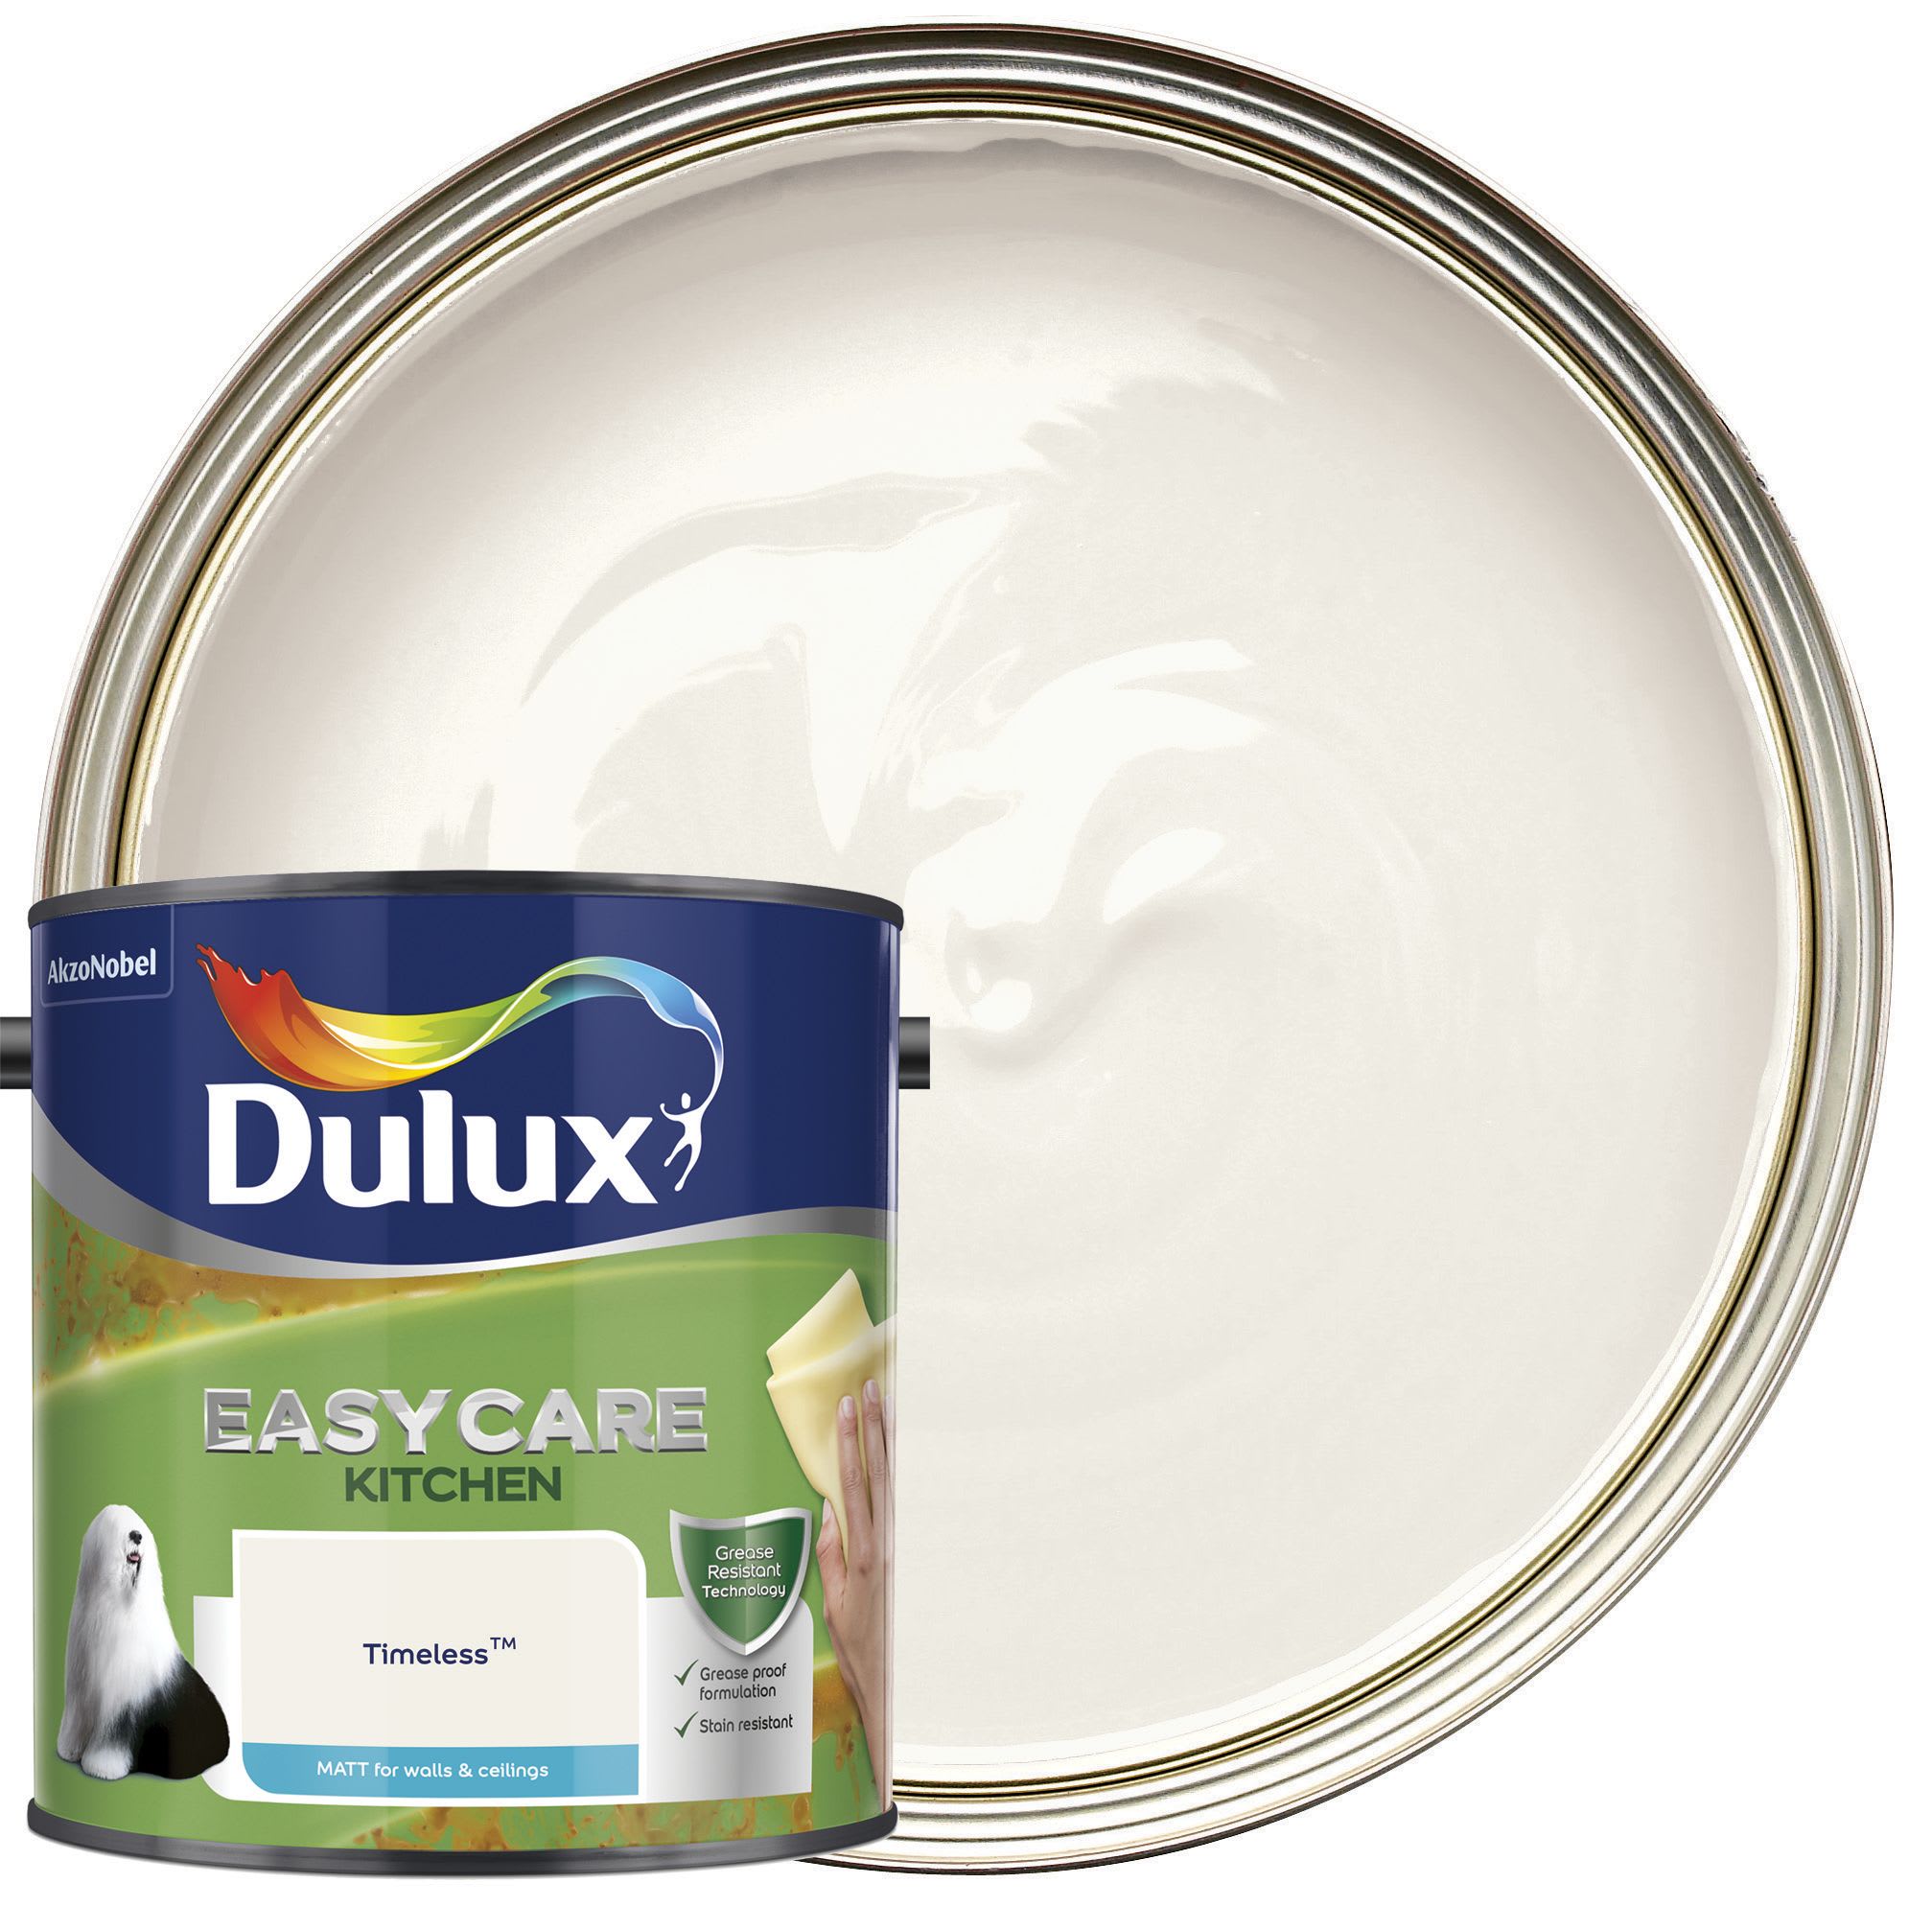 Dulux Easycare Kitchen Matt Emulsion Paint - Timeless